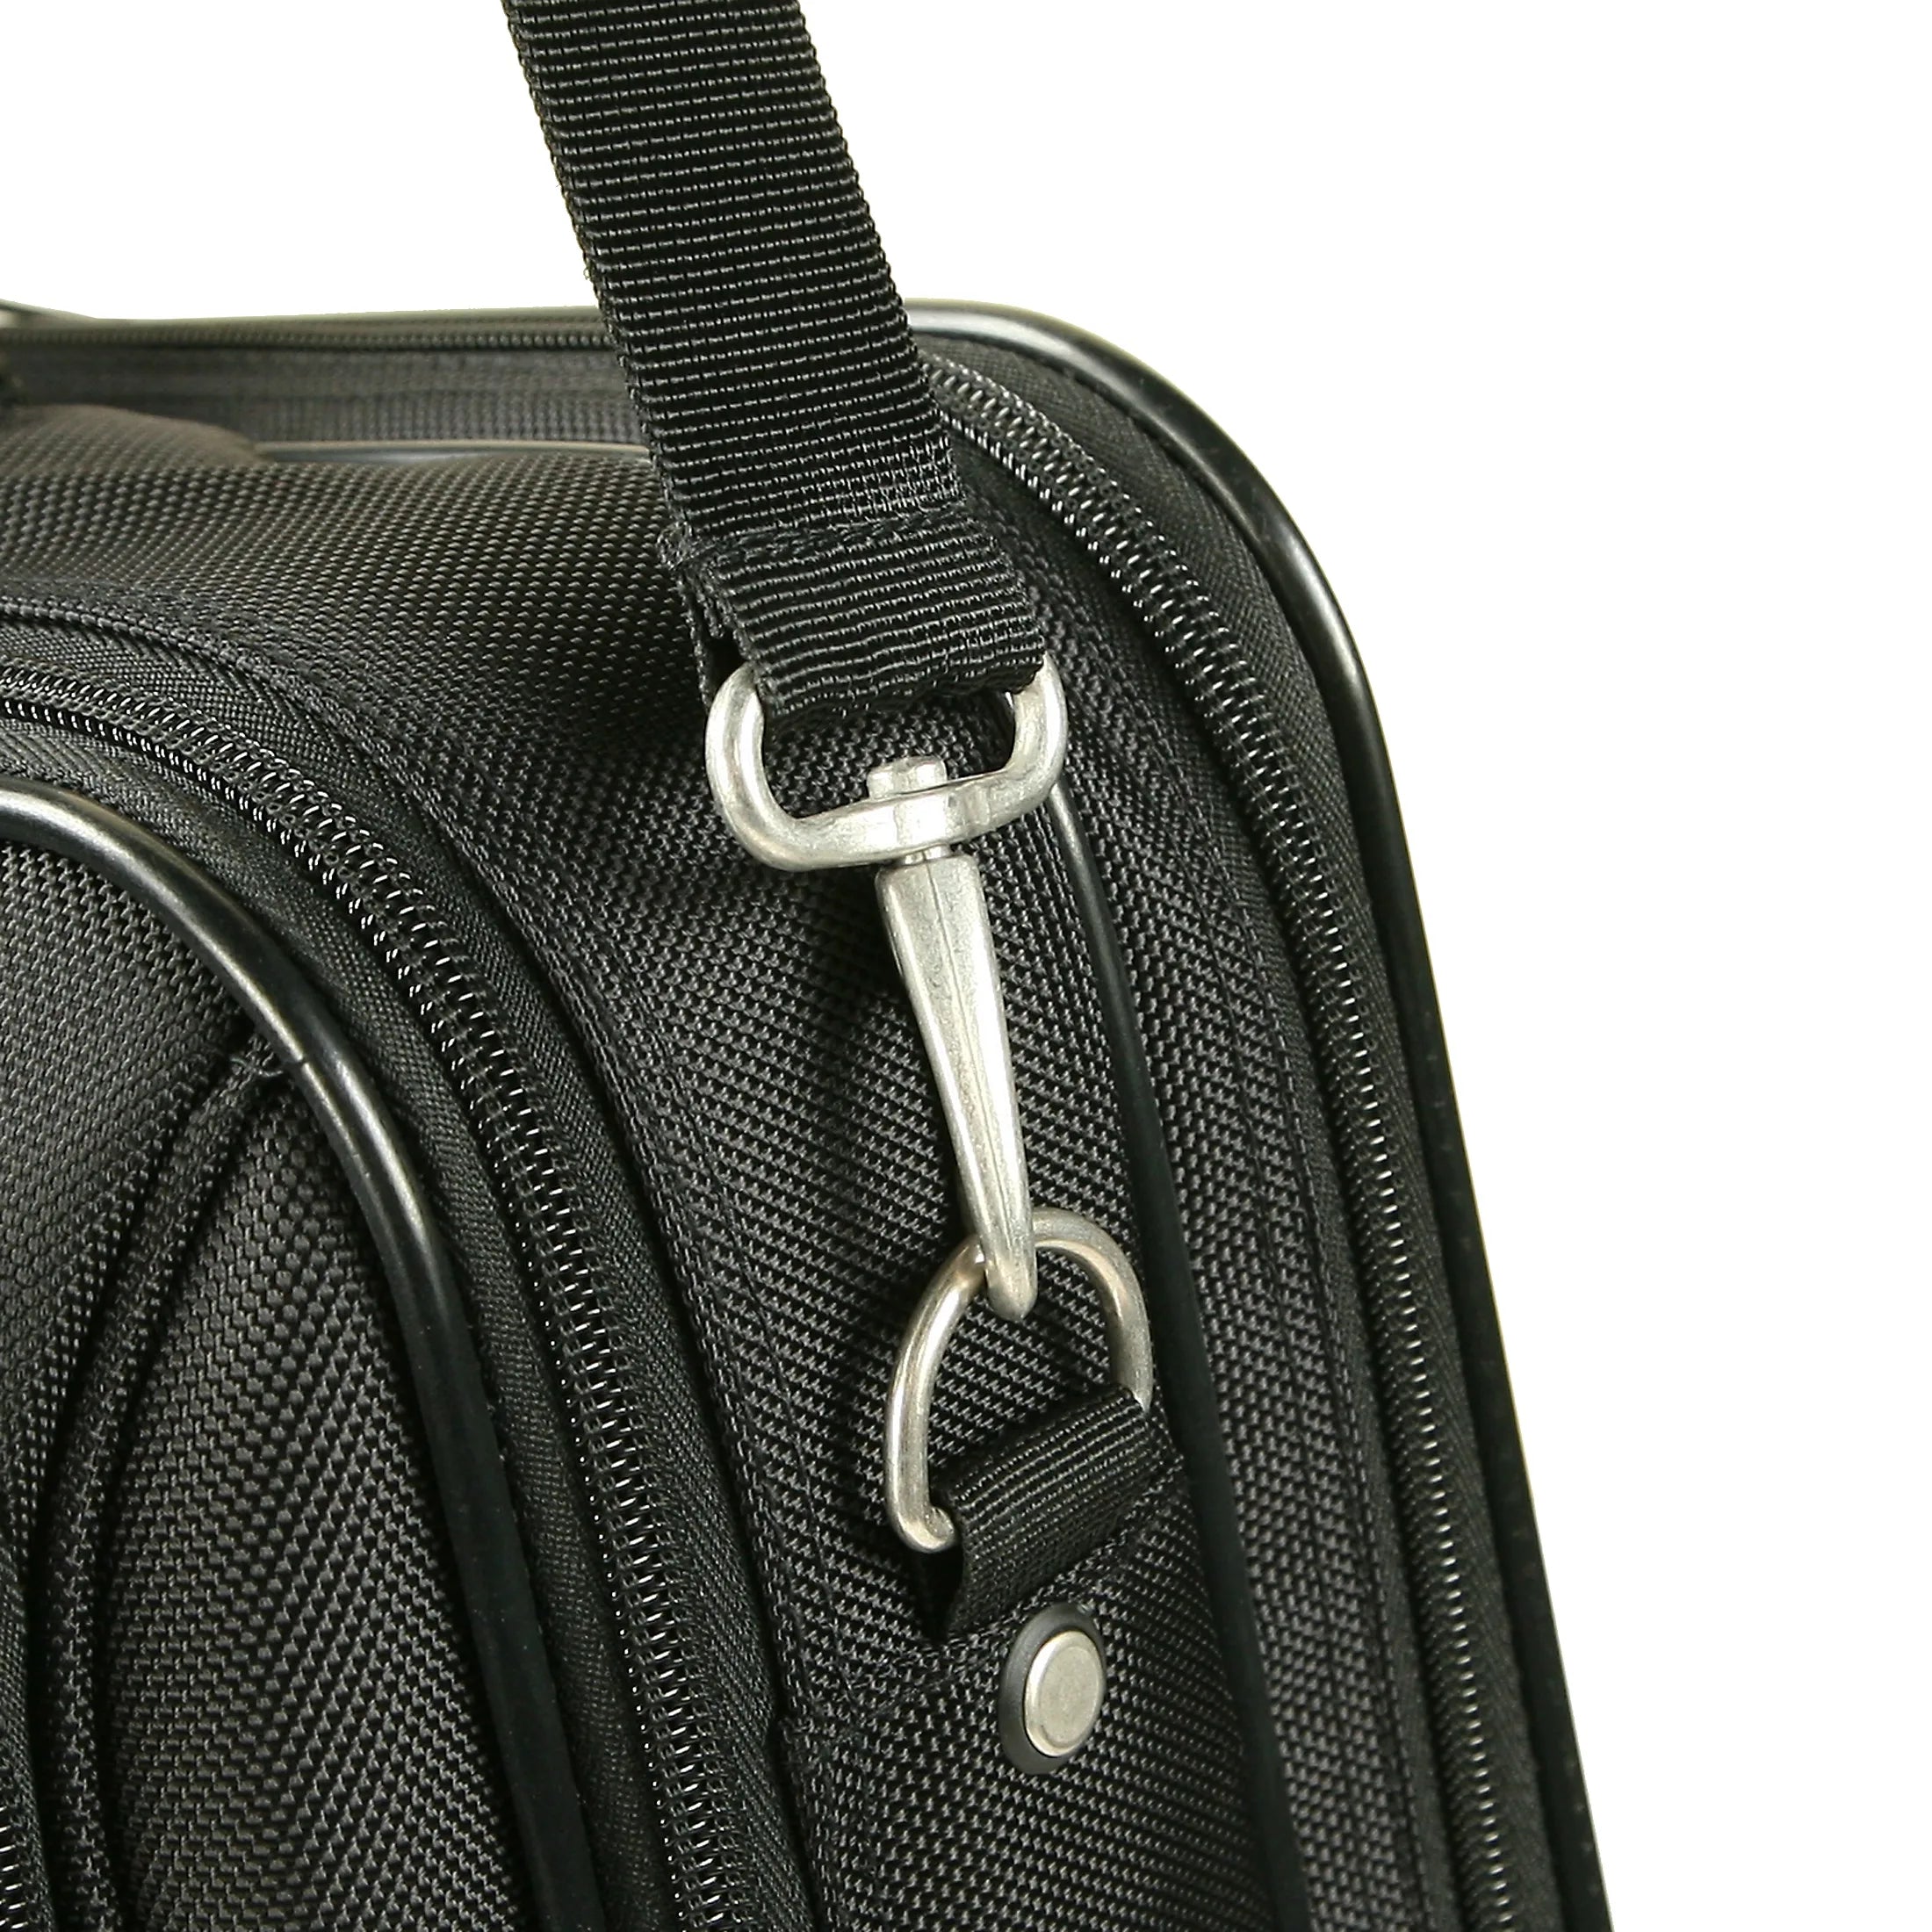 Dermata business briefcase with laptop compartment 44 cm - black